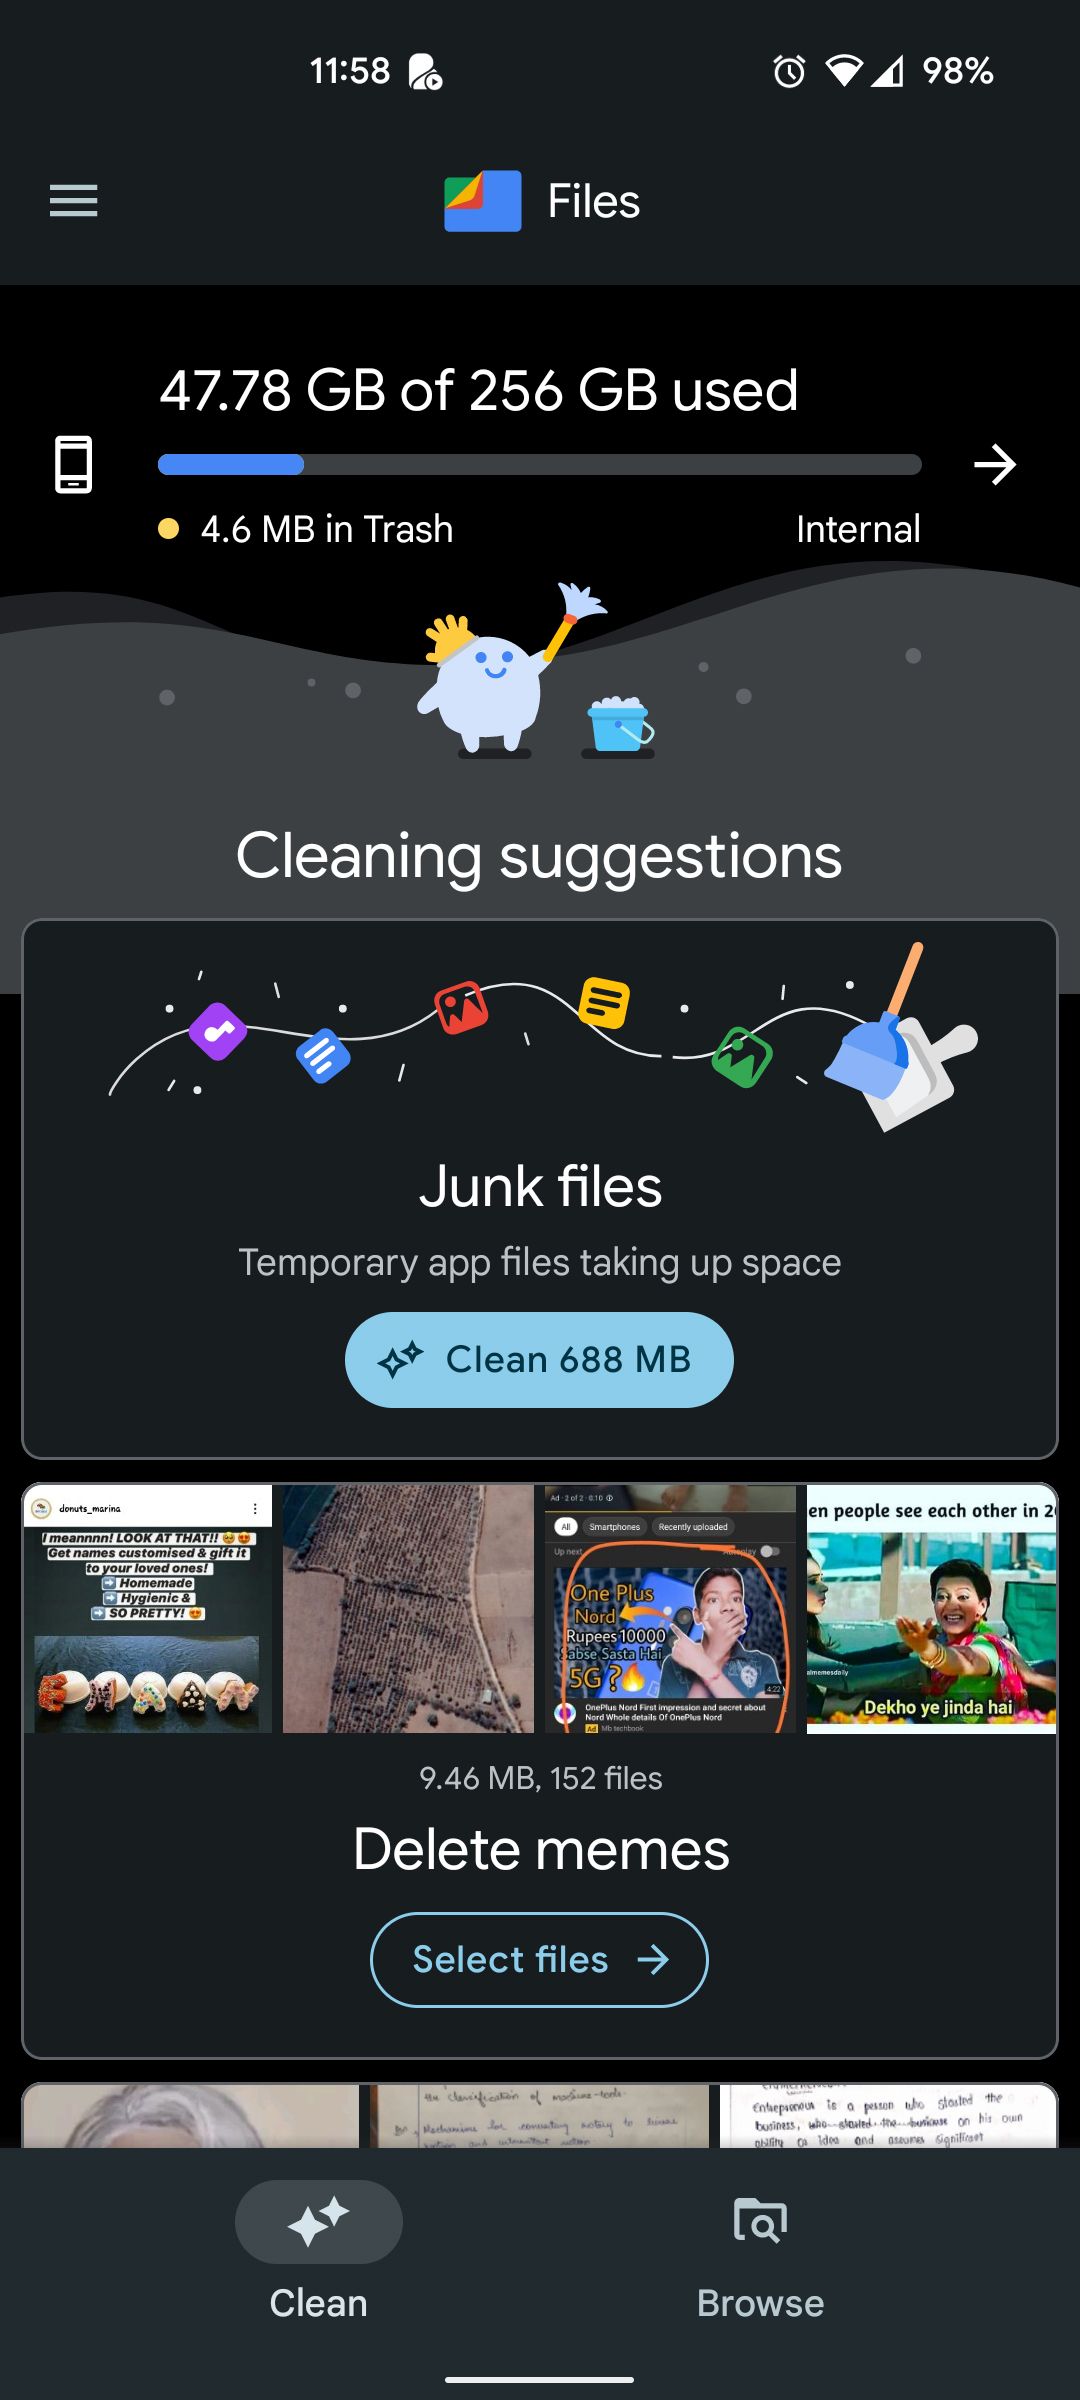 Files by Google dashboard displaying junk files